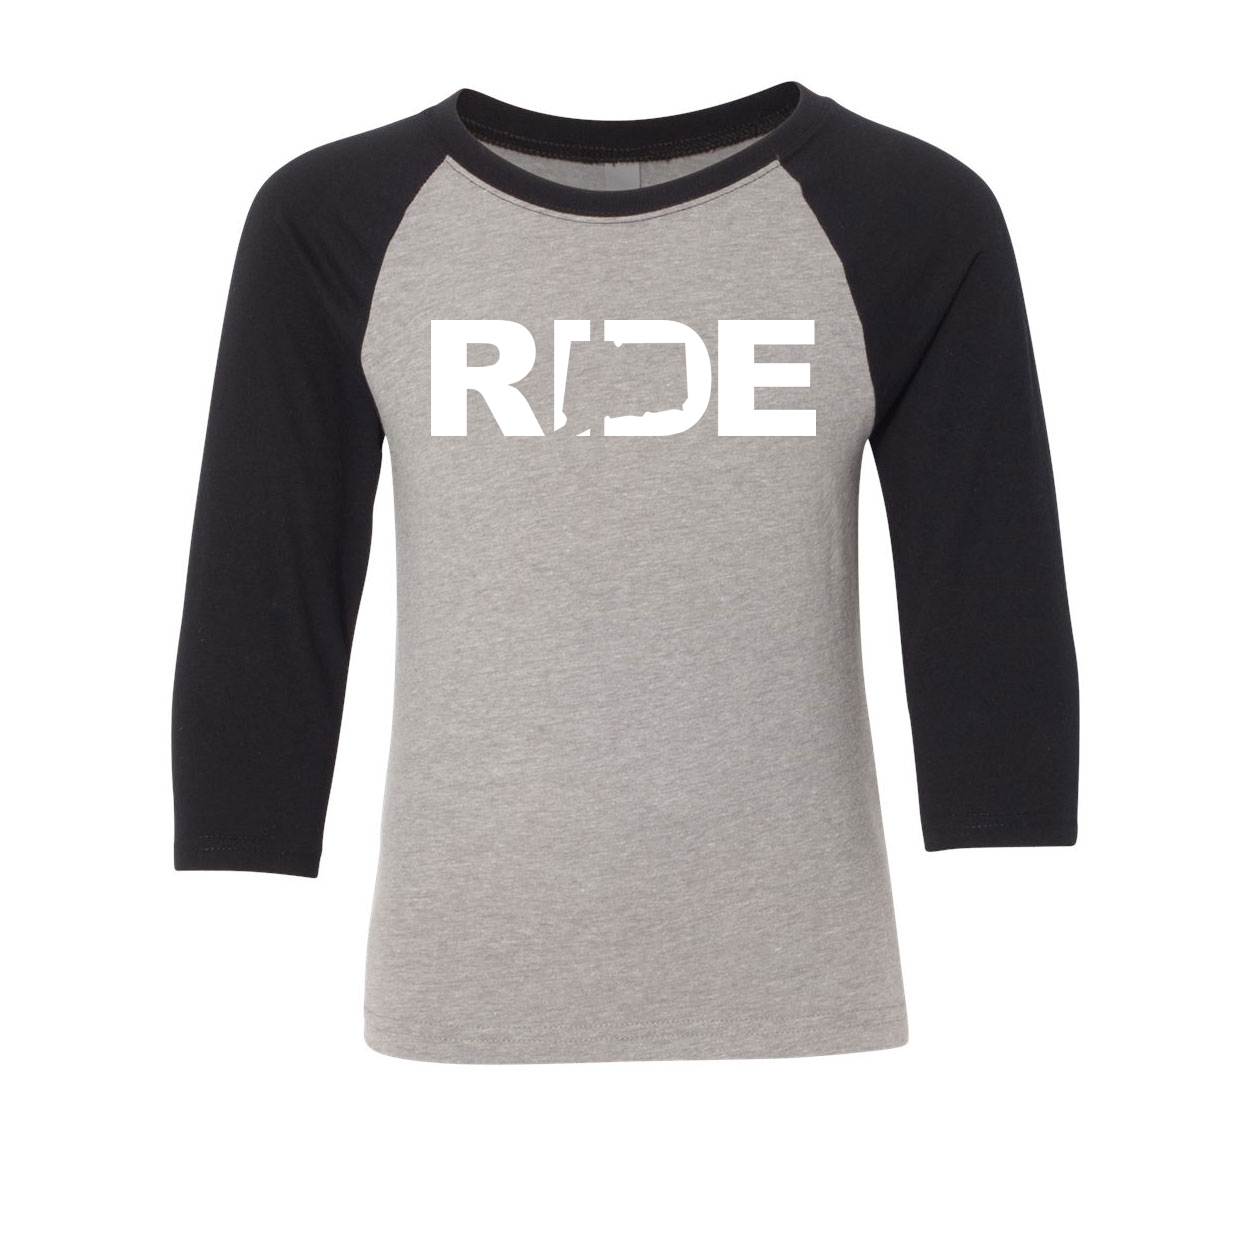 Ride Connecticut Classic Youth Premium Raglan Shirt Gray/Black (White Logo)